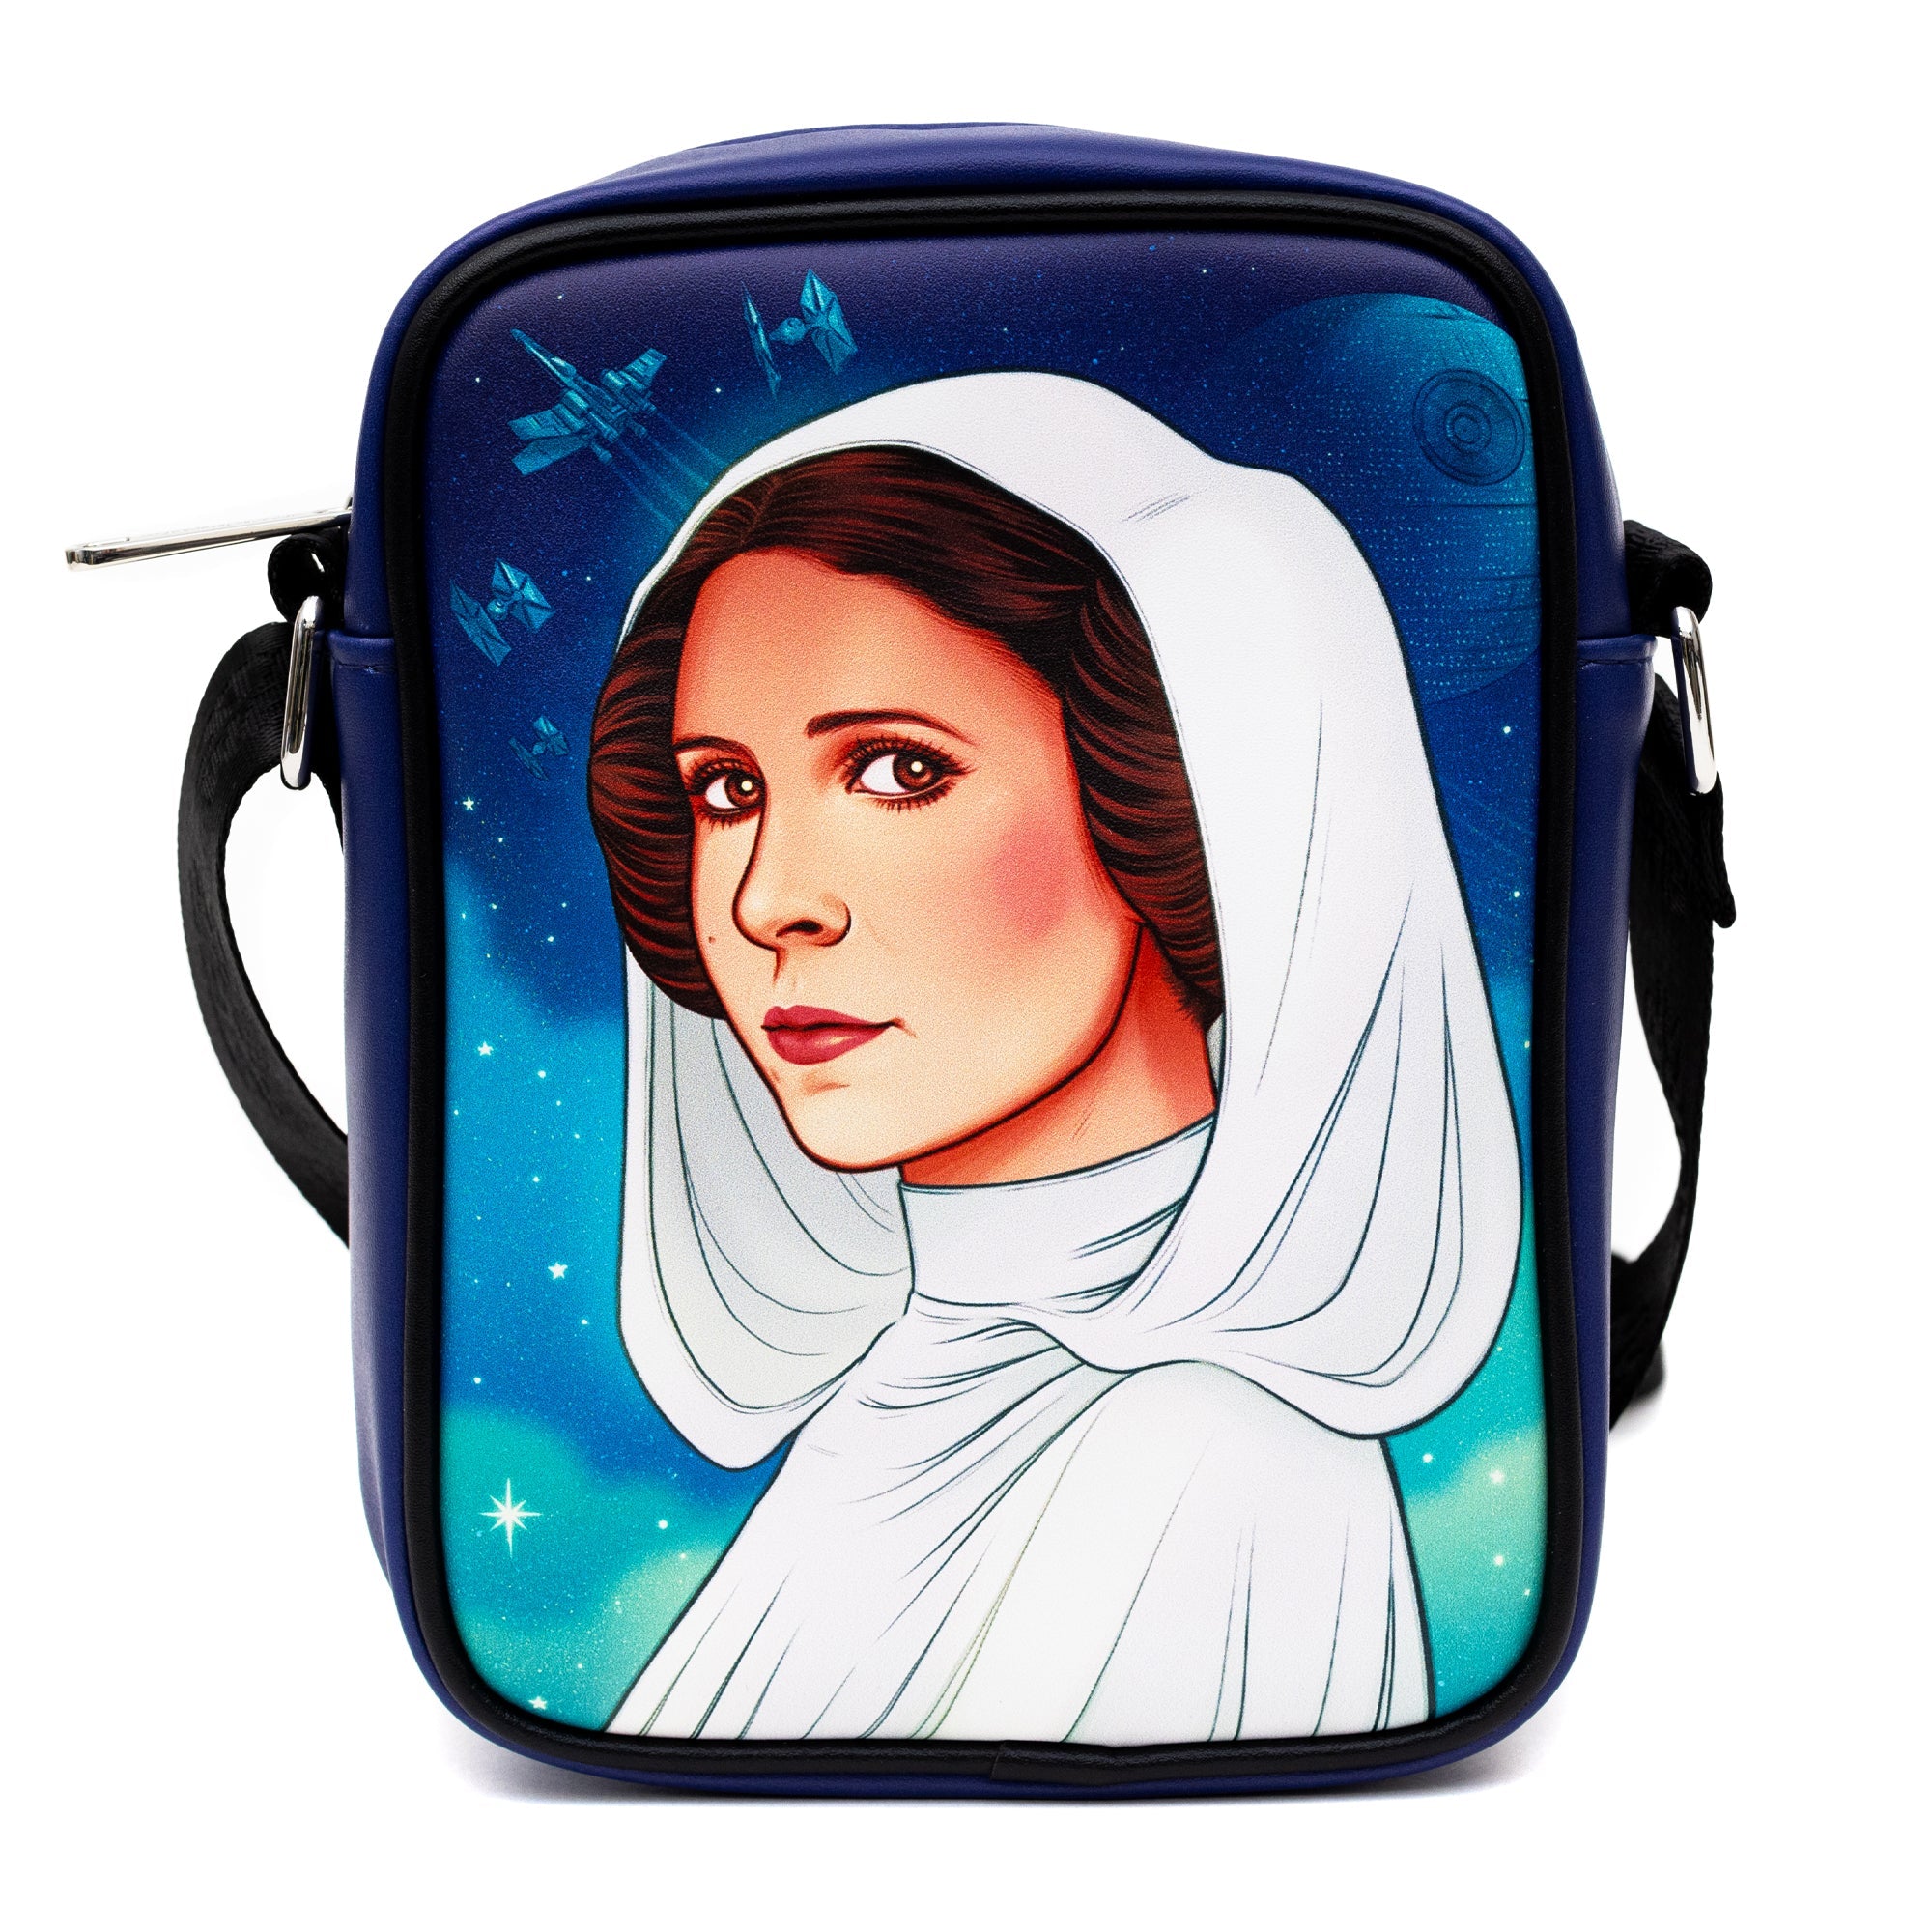 Star Wars Princess Leia Pose Crossbody Bag and Wallet Combo